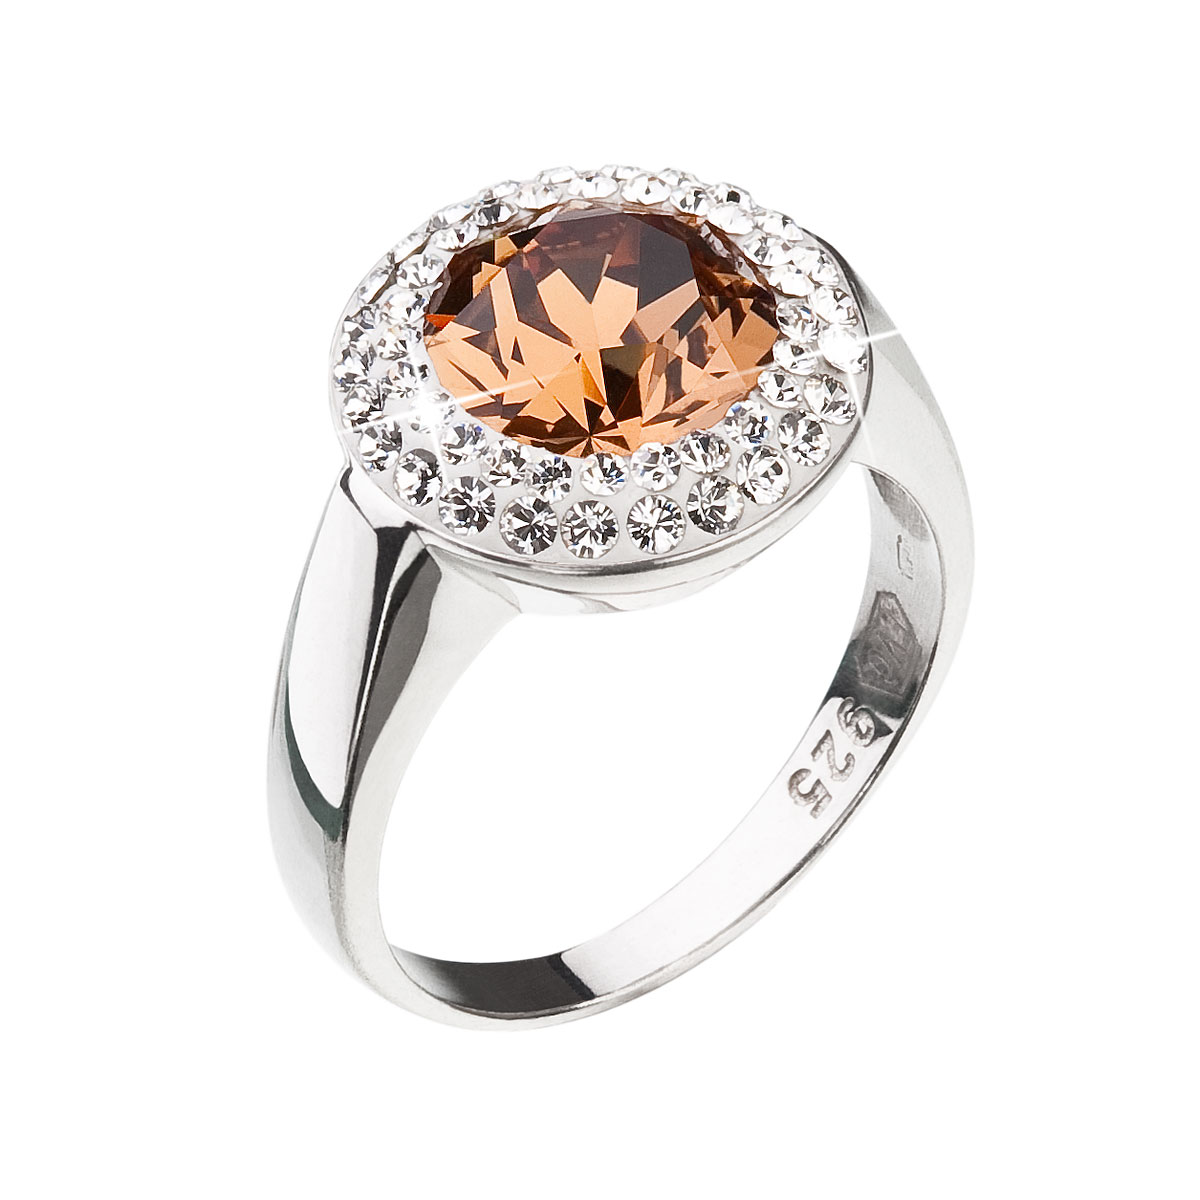 Evolution Group Stříbrný prsten s krystaly Swarovski hnědý kulatý 35026.3 lt. smoked topaz